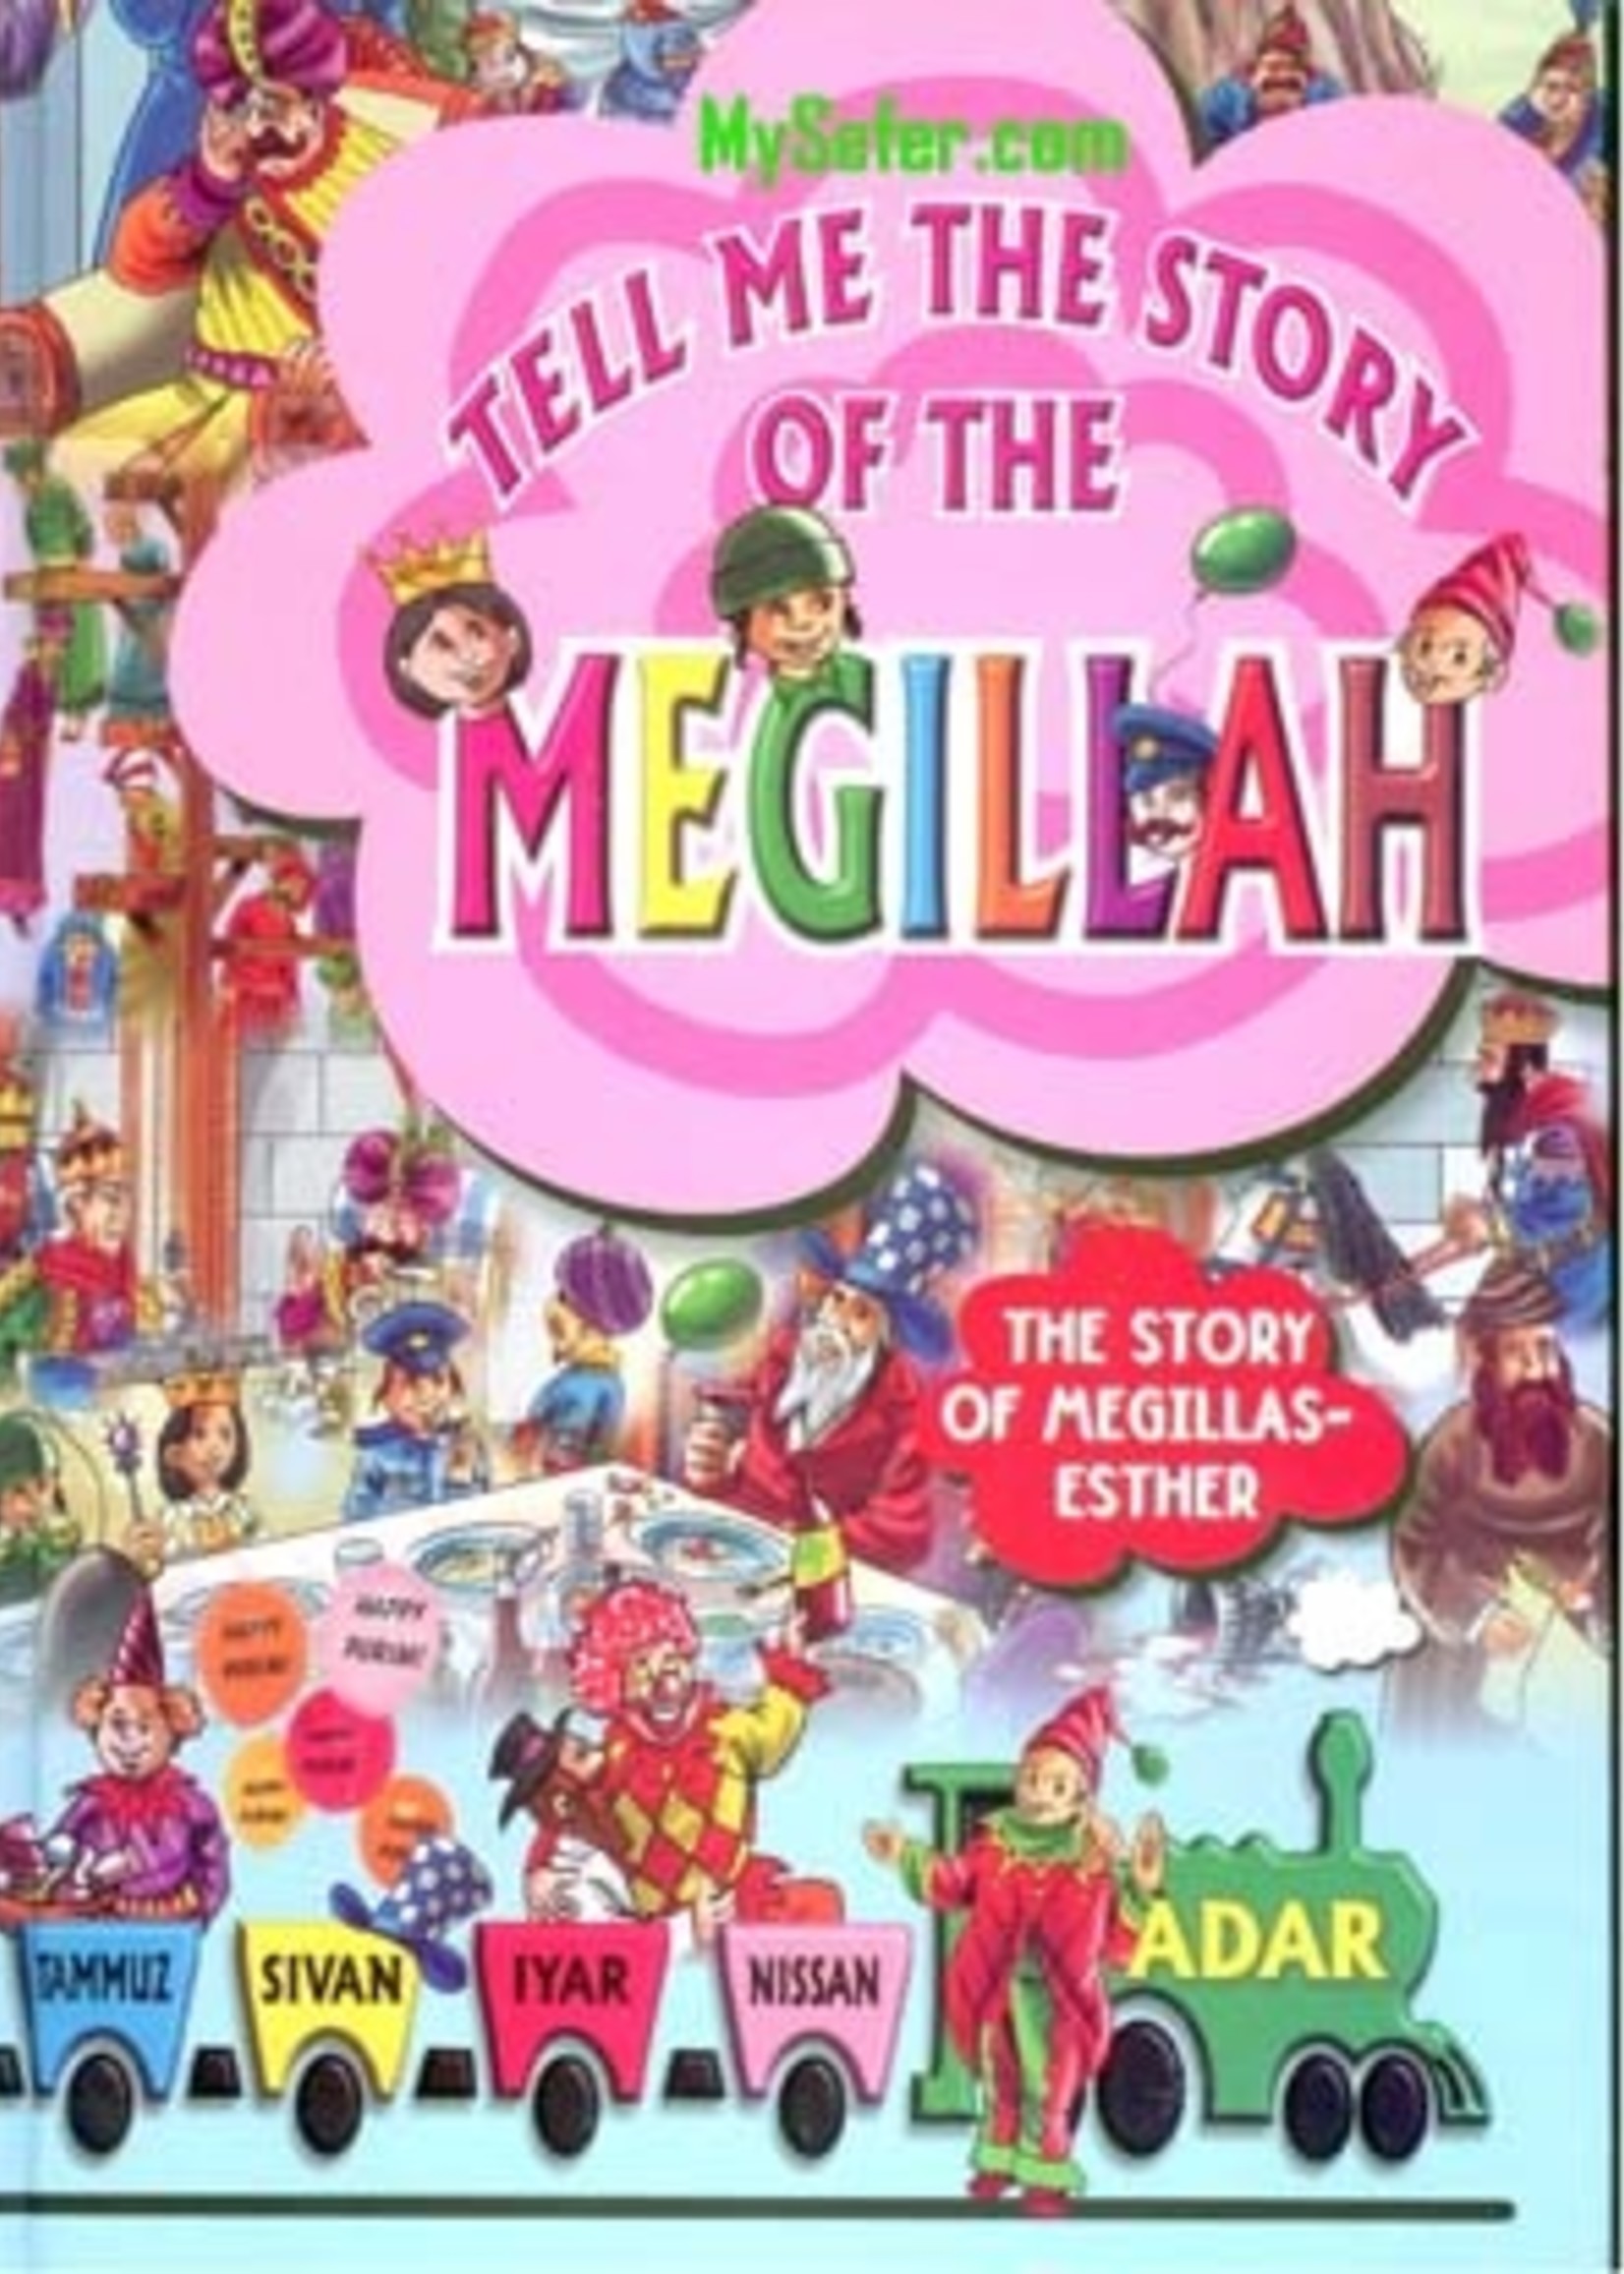 M Klein Tell Me the Story of the Megillah 9.5x12.5